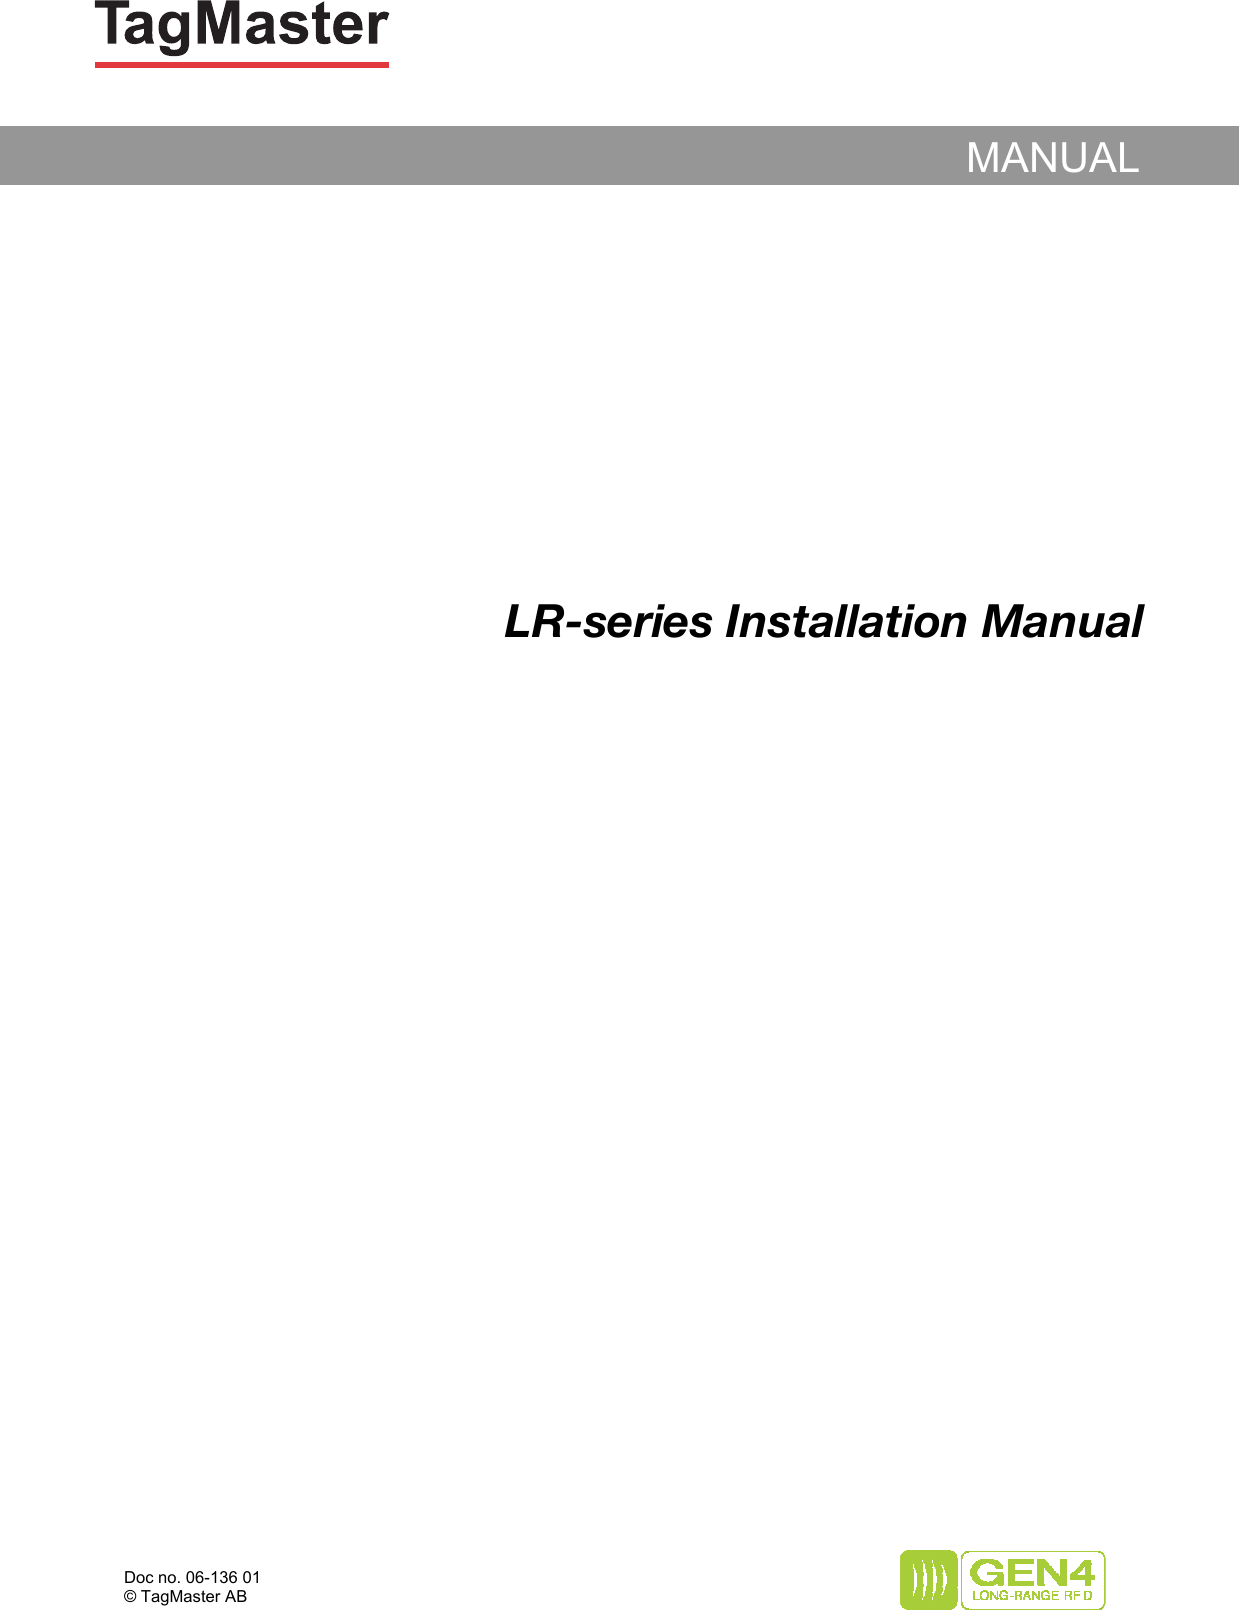                                                                  MANUAL             LR-series Installation Manual                      Doc no. 06-136 01 © TagMaster AB 